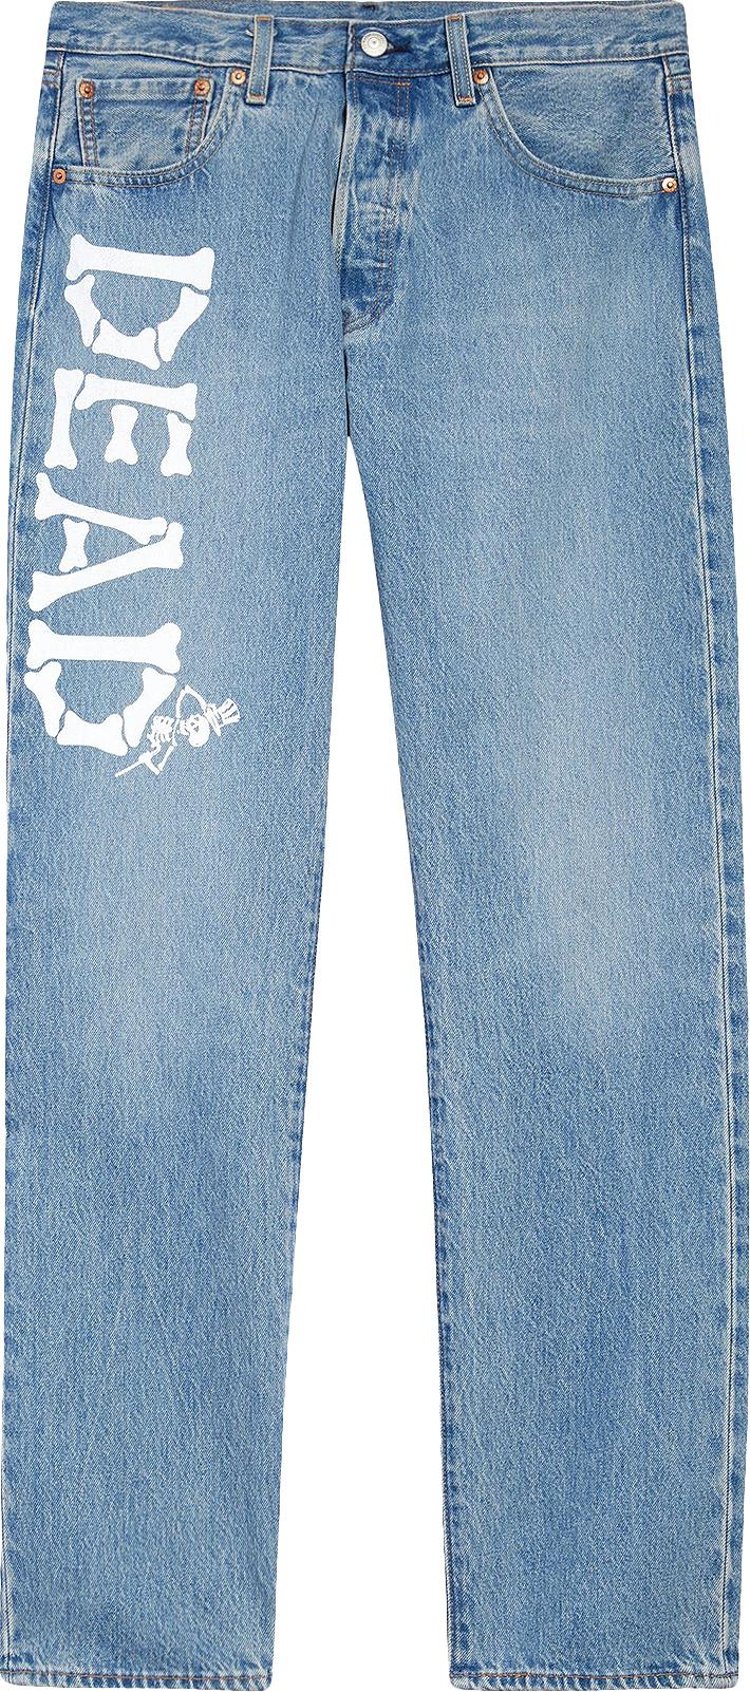 Levi's x Grateful Dead 501 Jeans 'Medium Wash' | GOAT